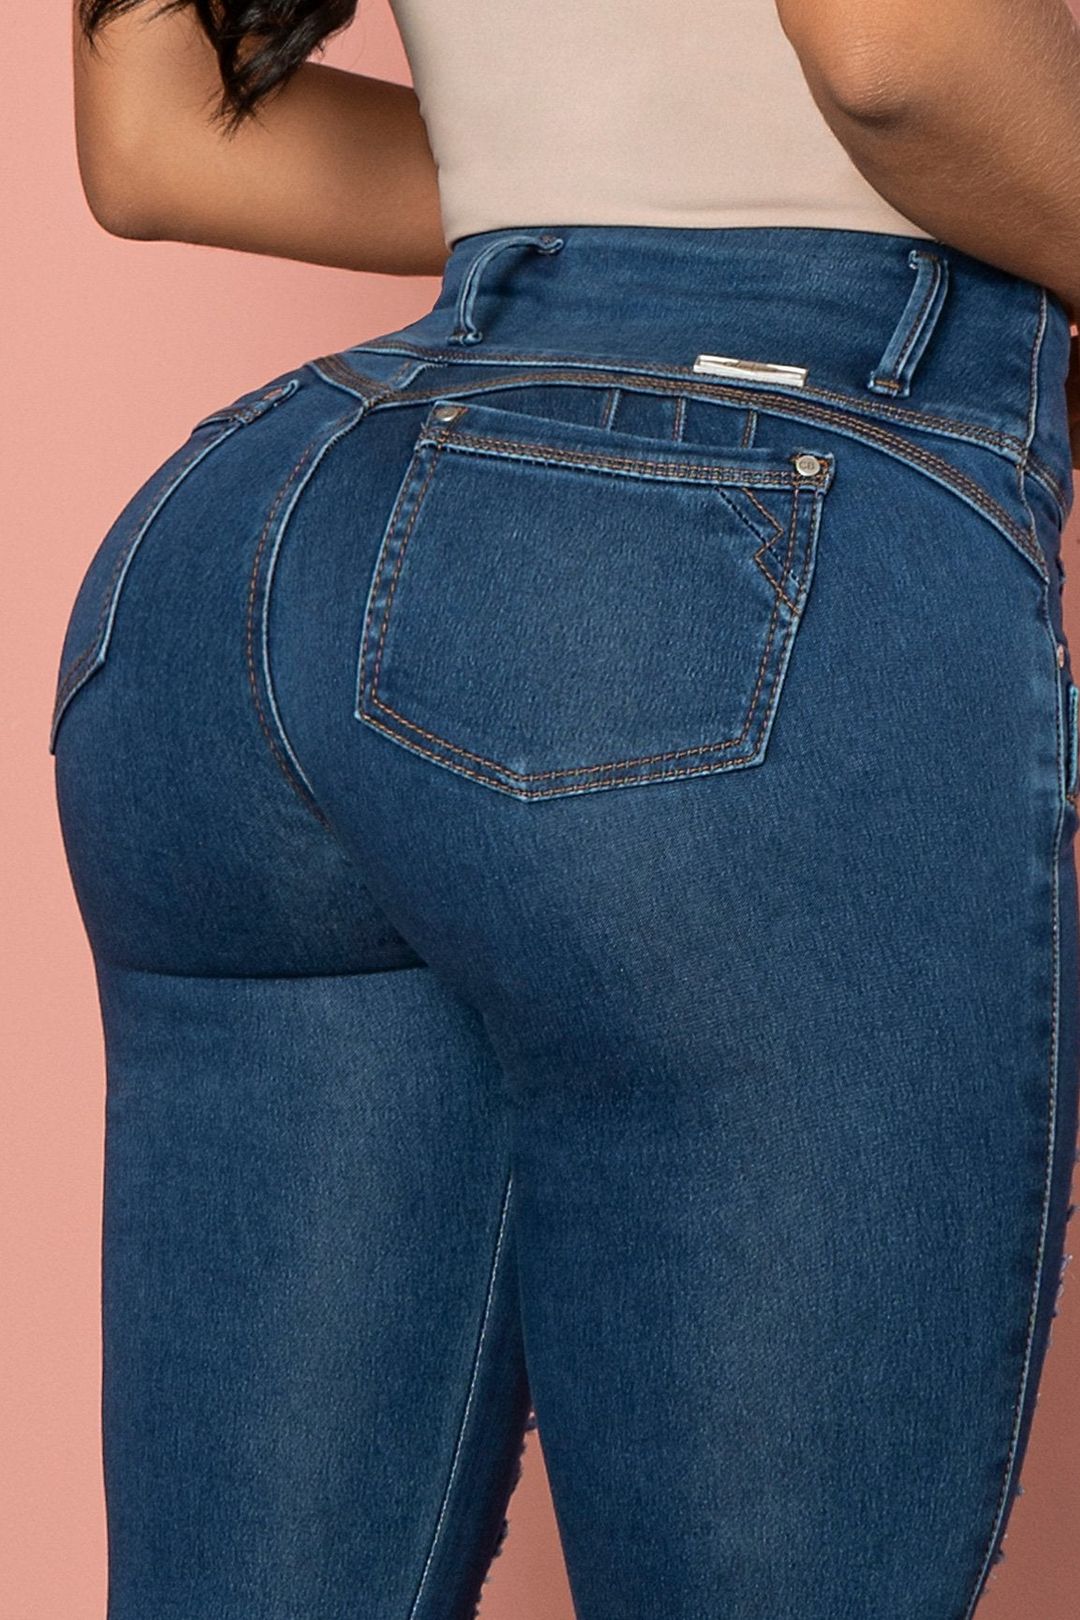 davinder multani add booty in tight jeans photo